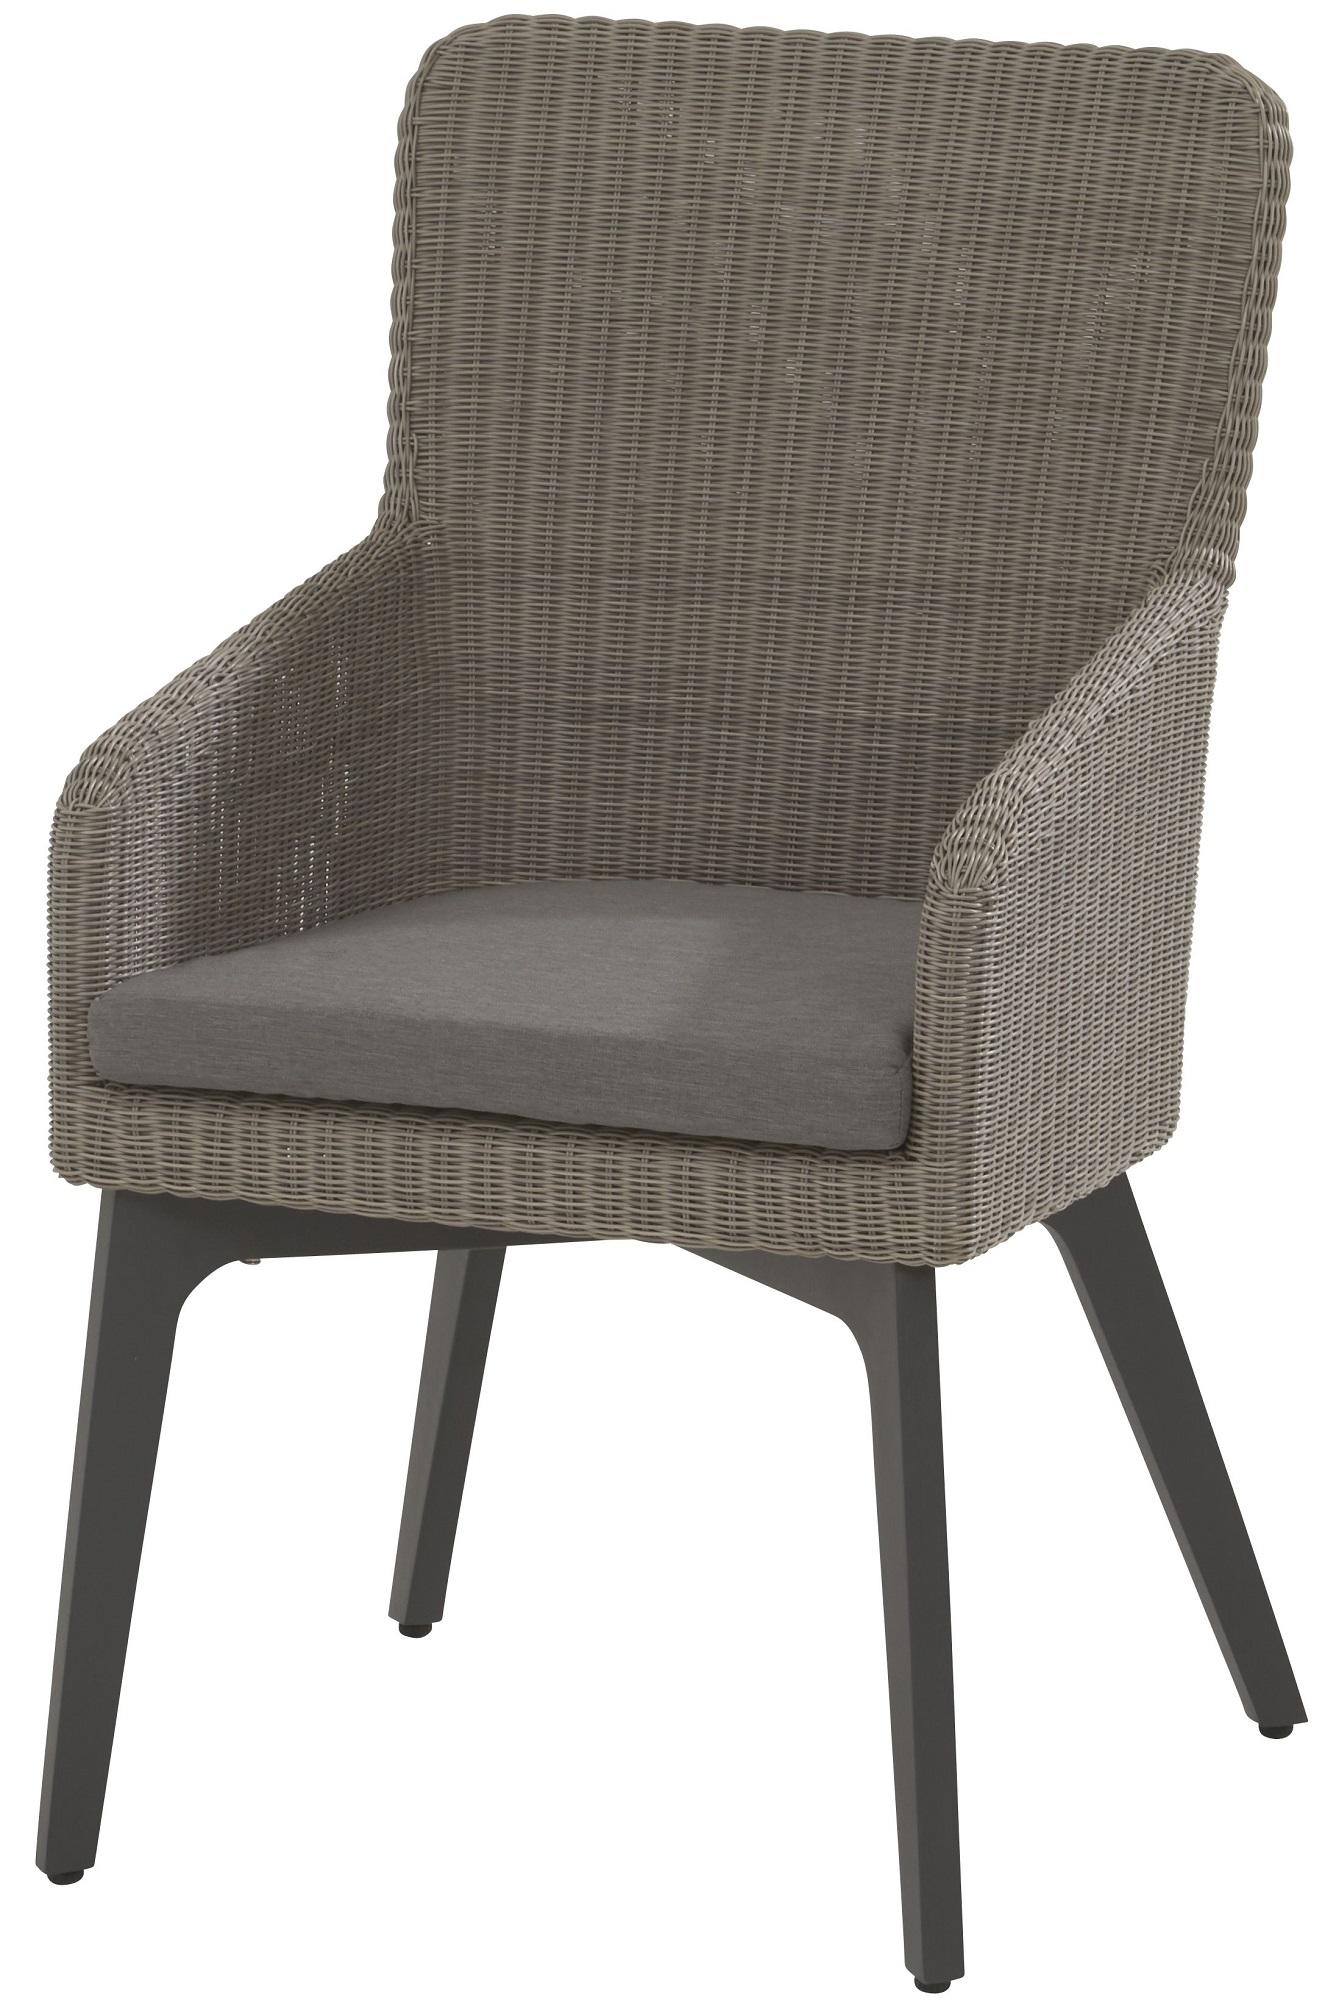 pebble rattan garden dining chair with grey aluminium legs